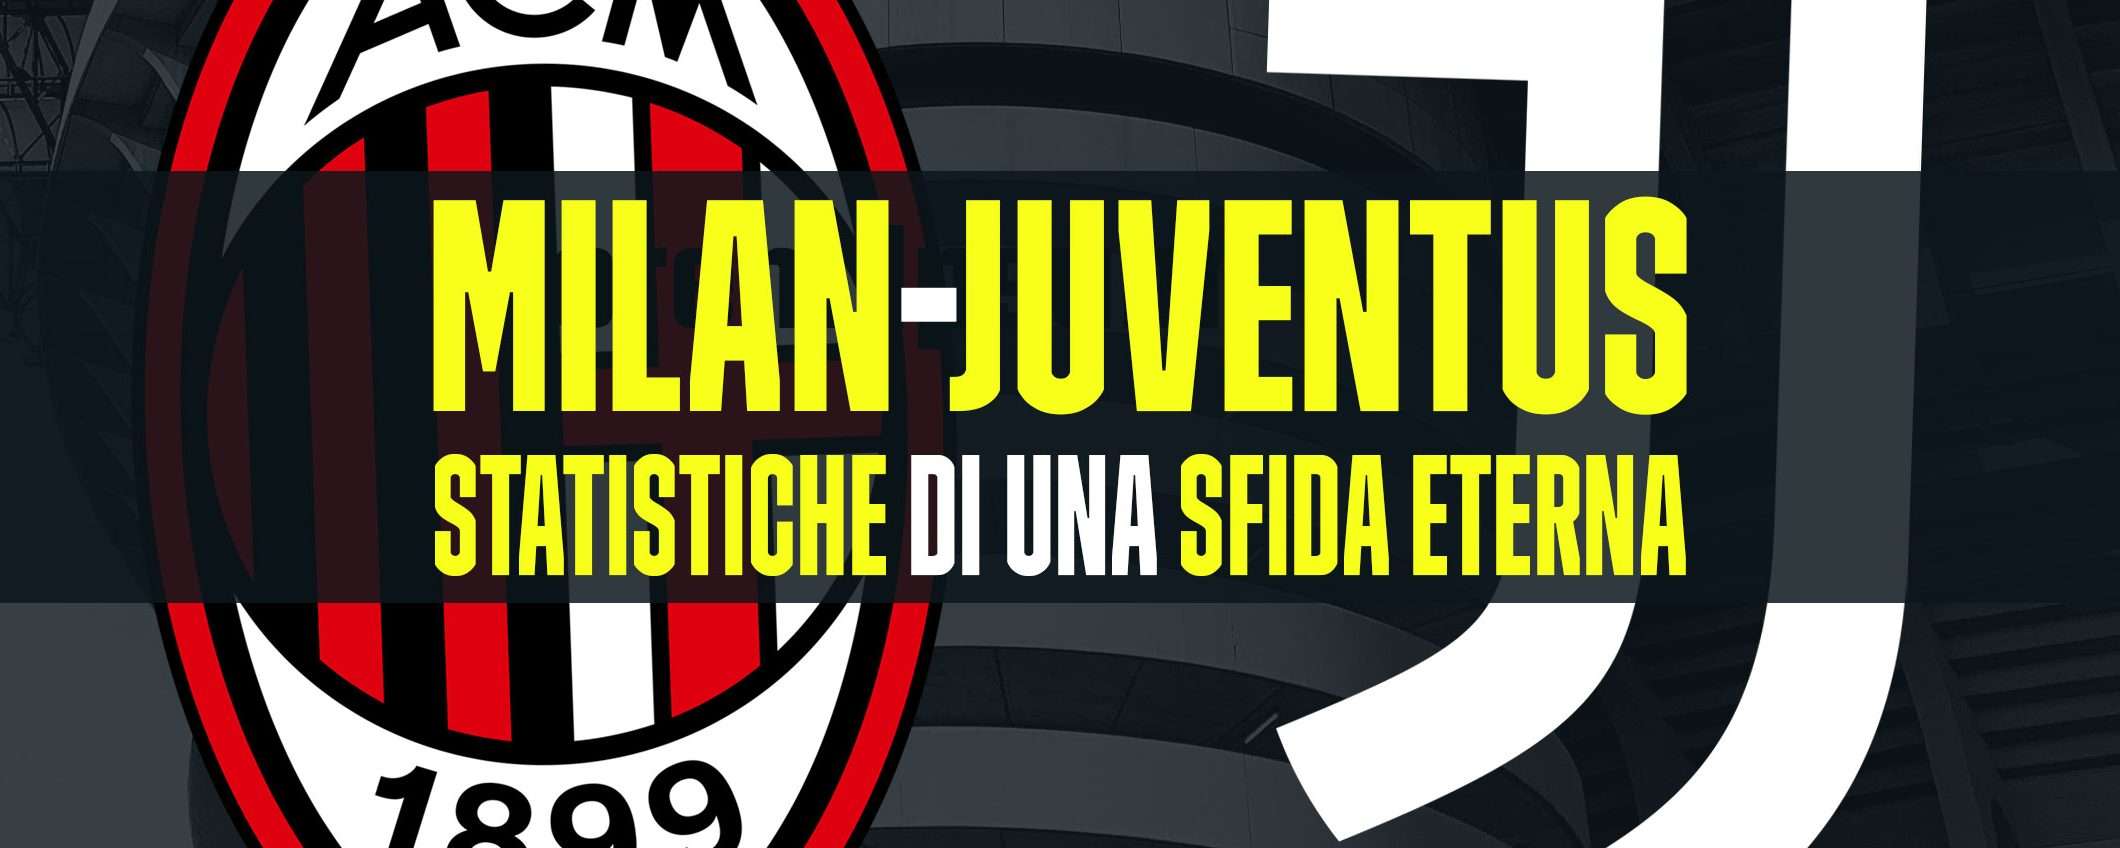 Milan-Juventus: le statistiche di una sfida eterna